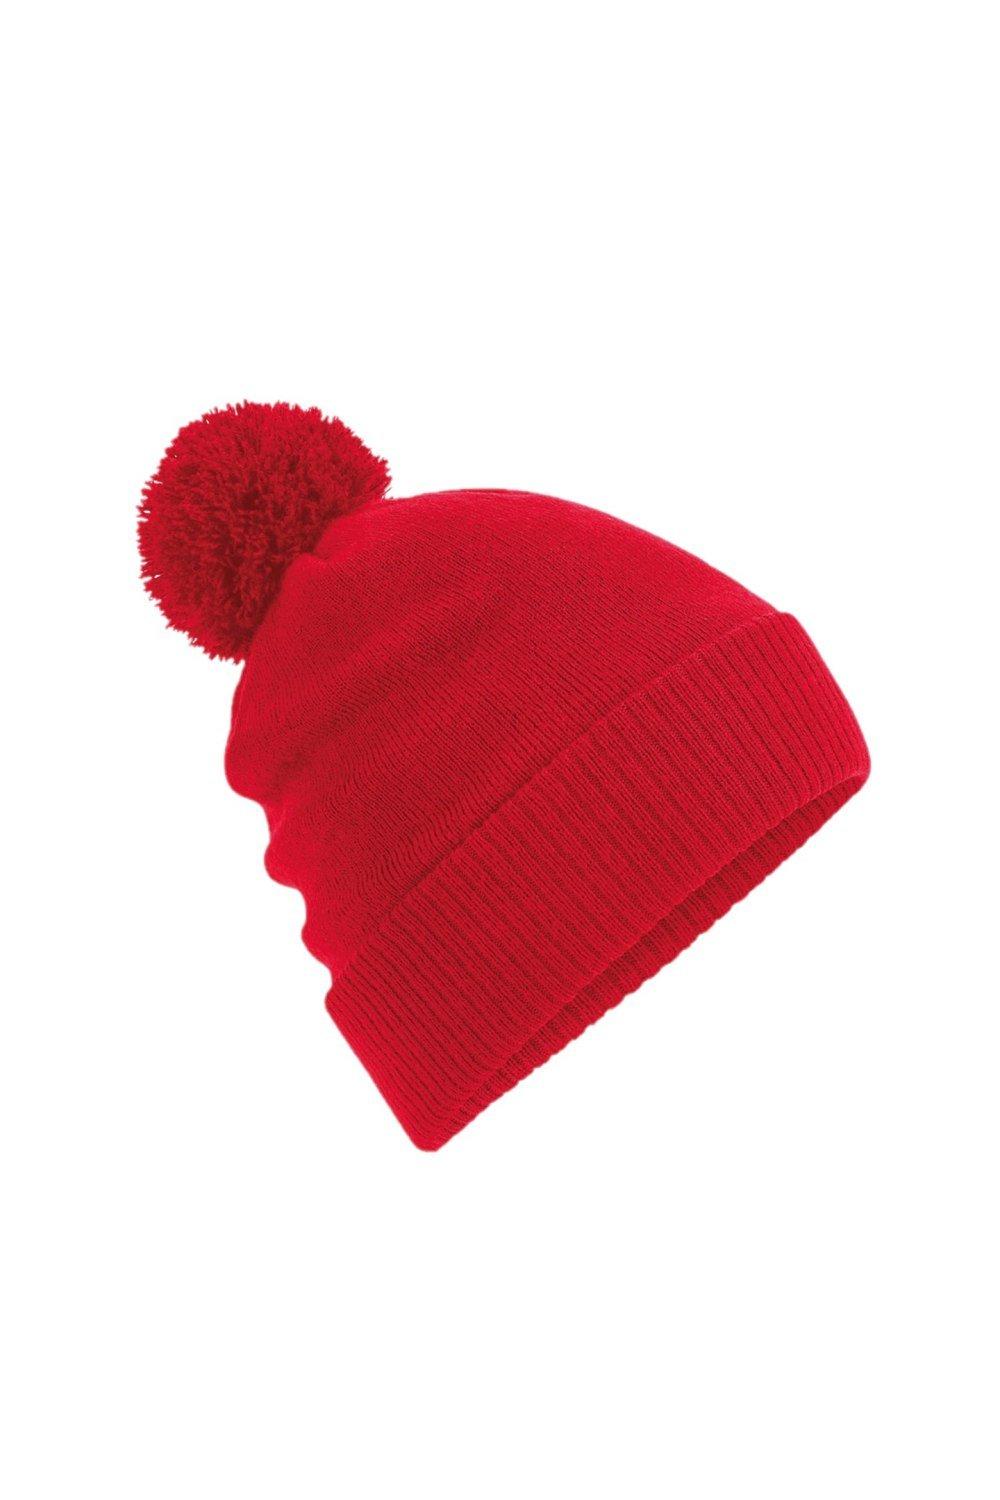 Тепловая шапка Snowstar Beechfield, красный